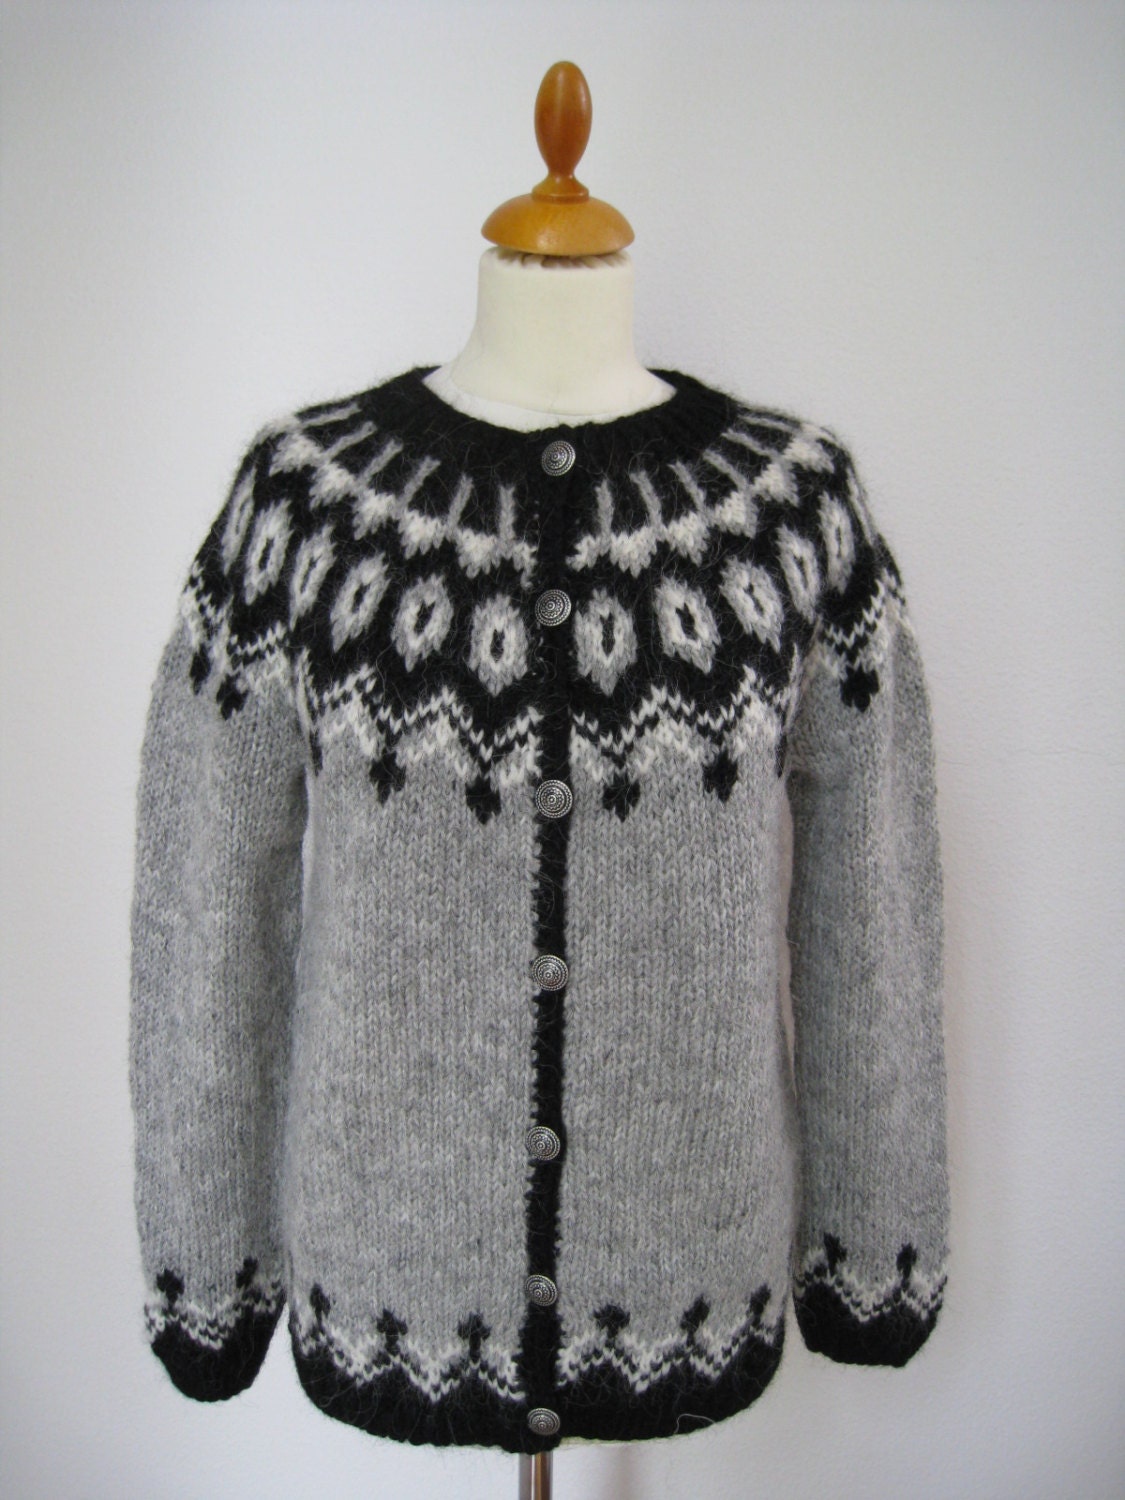 Handmade Icelandic wool sweater or Lopapeysa as we call it | Etsy